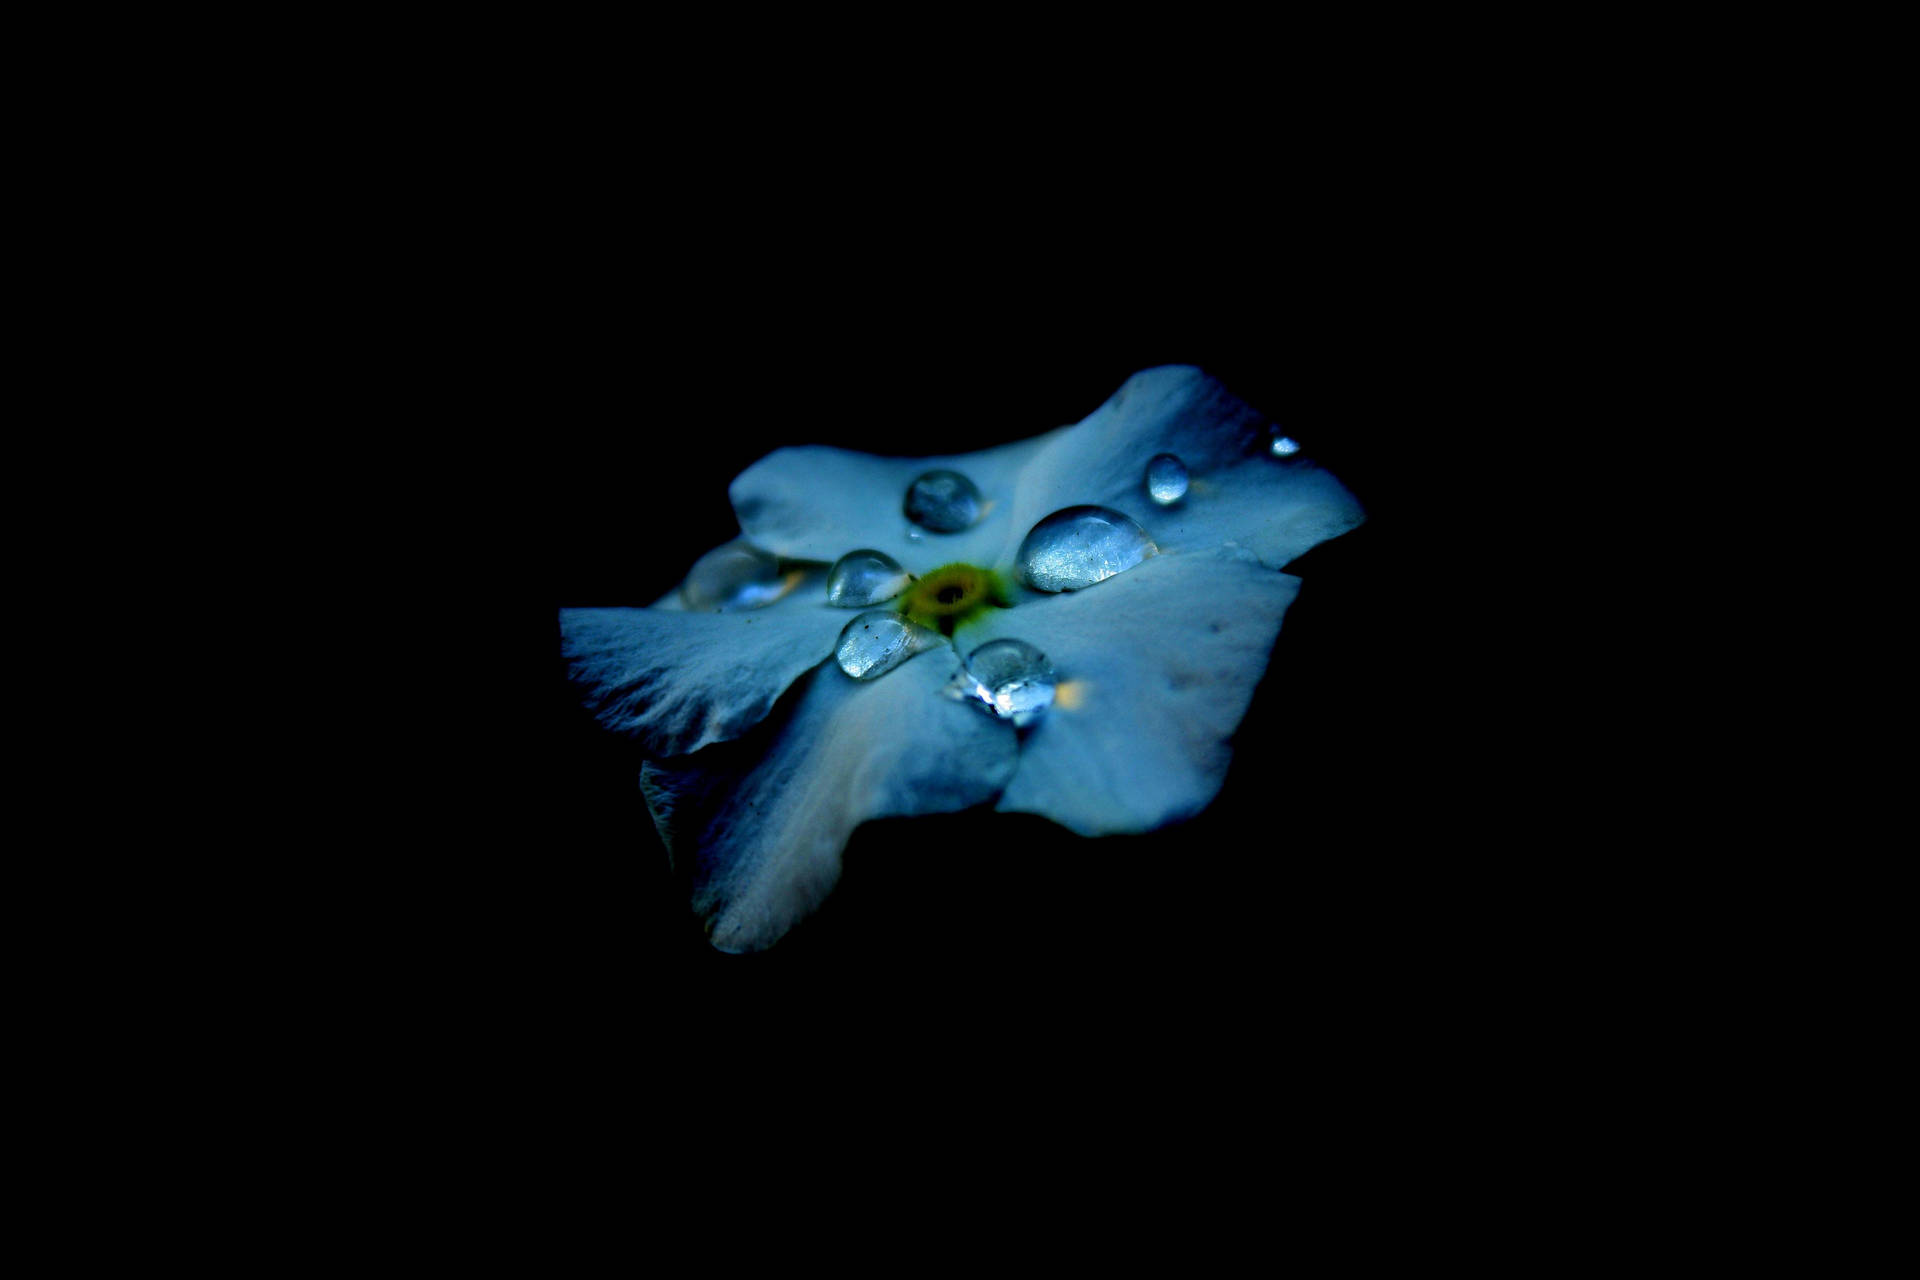 raindrops on blue flowers